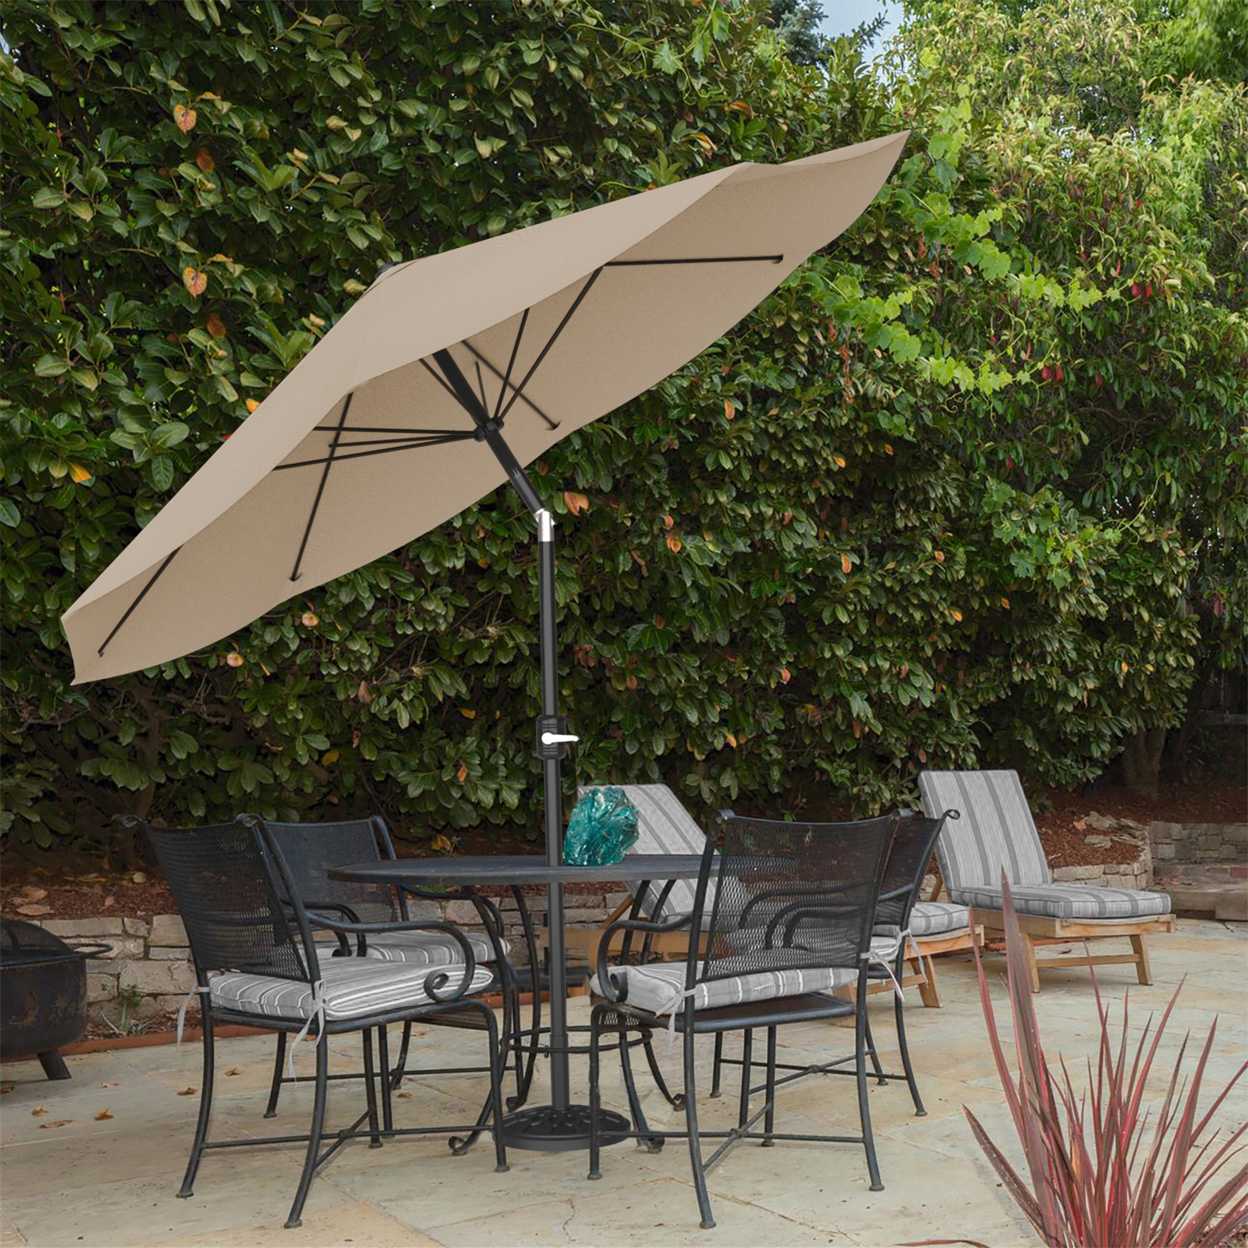 Patio Umbrella With Auto Tilt- Easy Crank Outdoor Table Umbrella Shade 10 Ft Sand